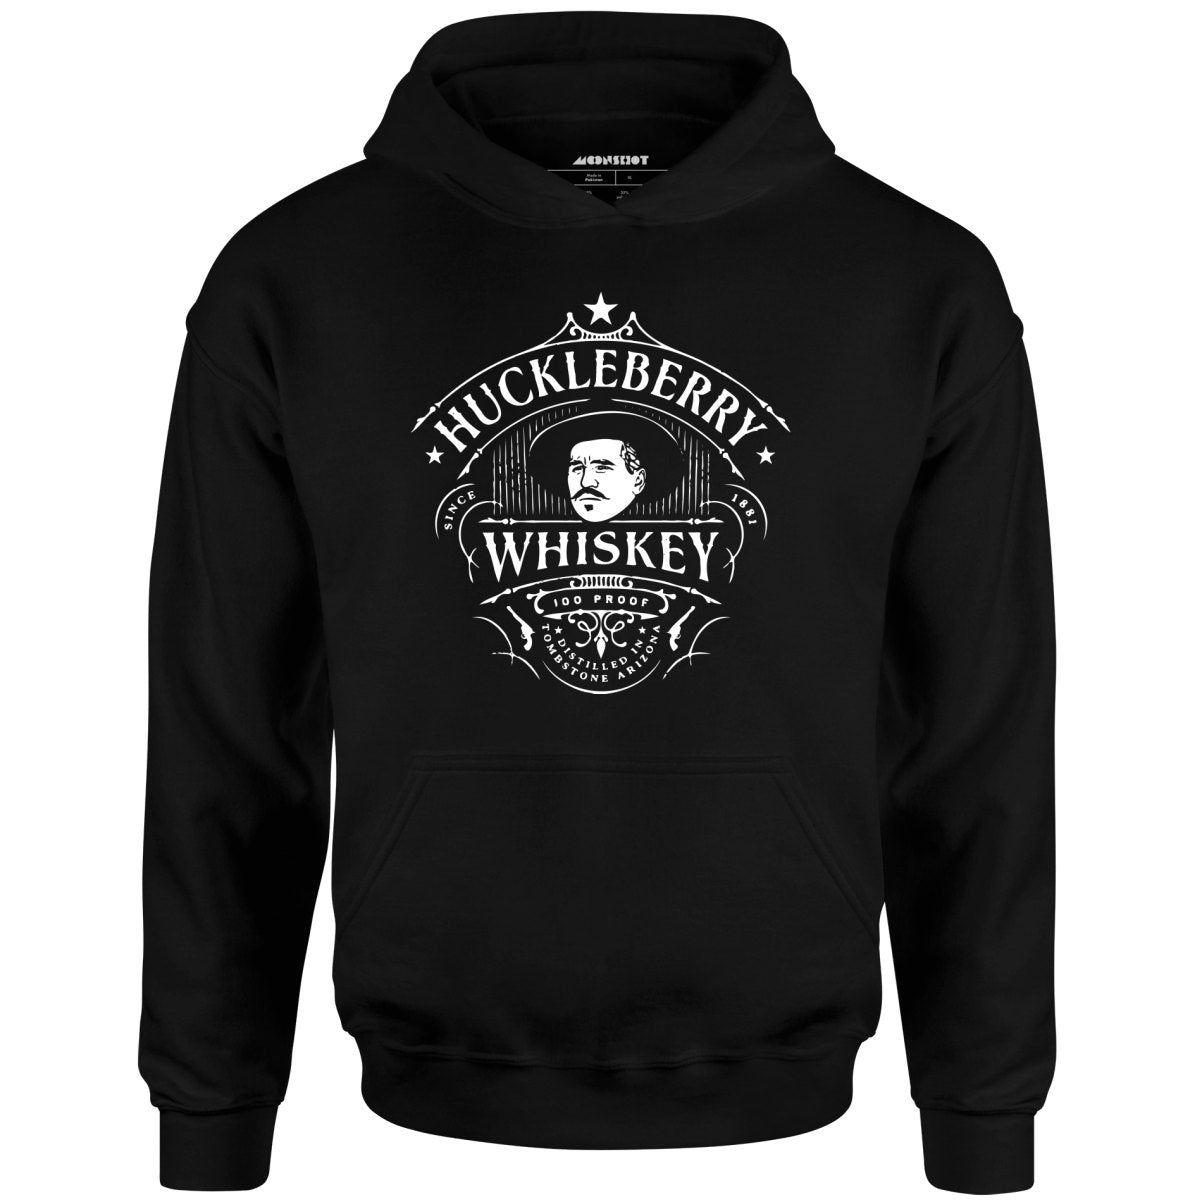 Huckleberry Whiskey - Unisex Hoodie